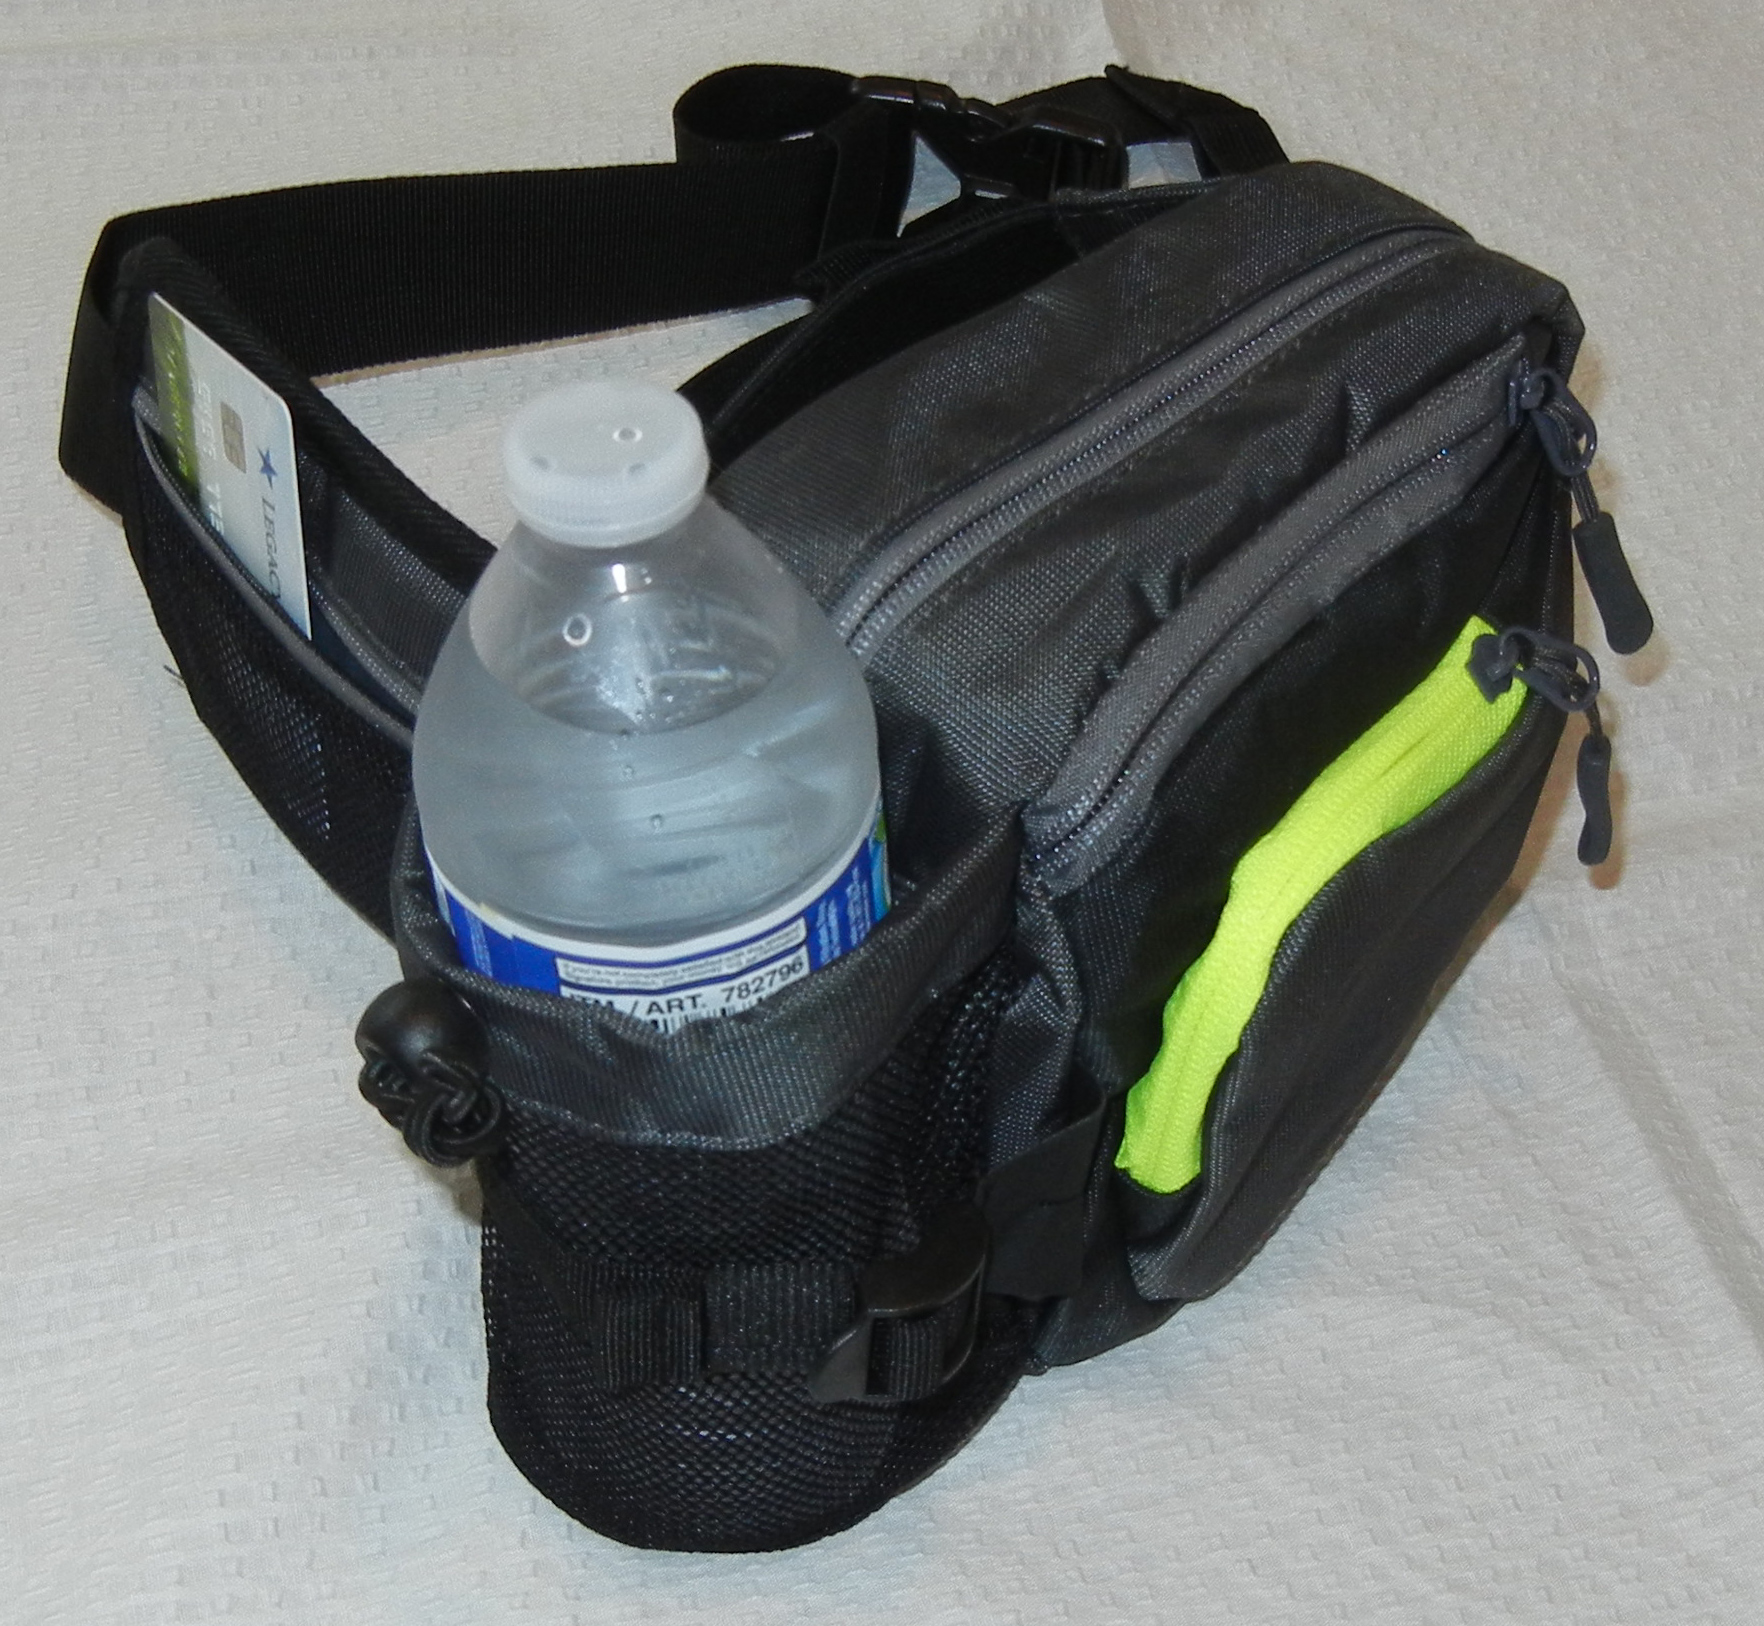 Waist Bag / Fanny Pack With Water Bottle Holder 4 pockets